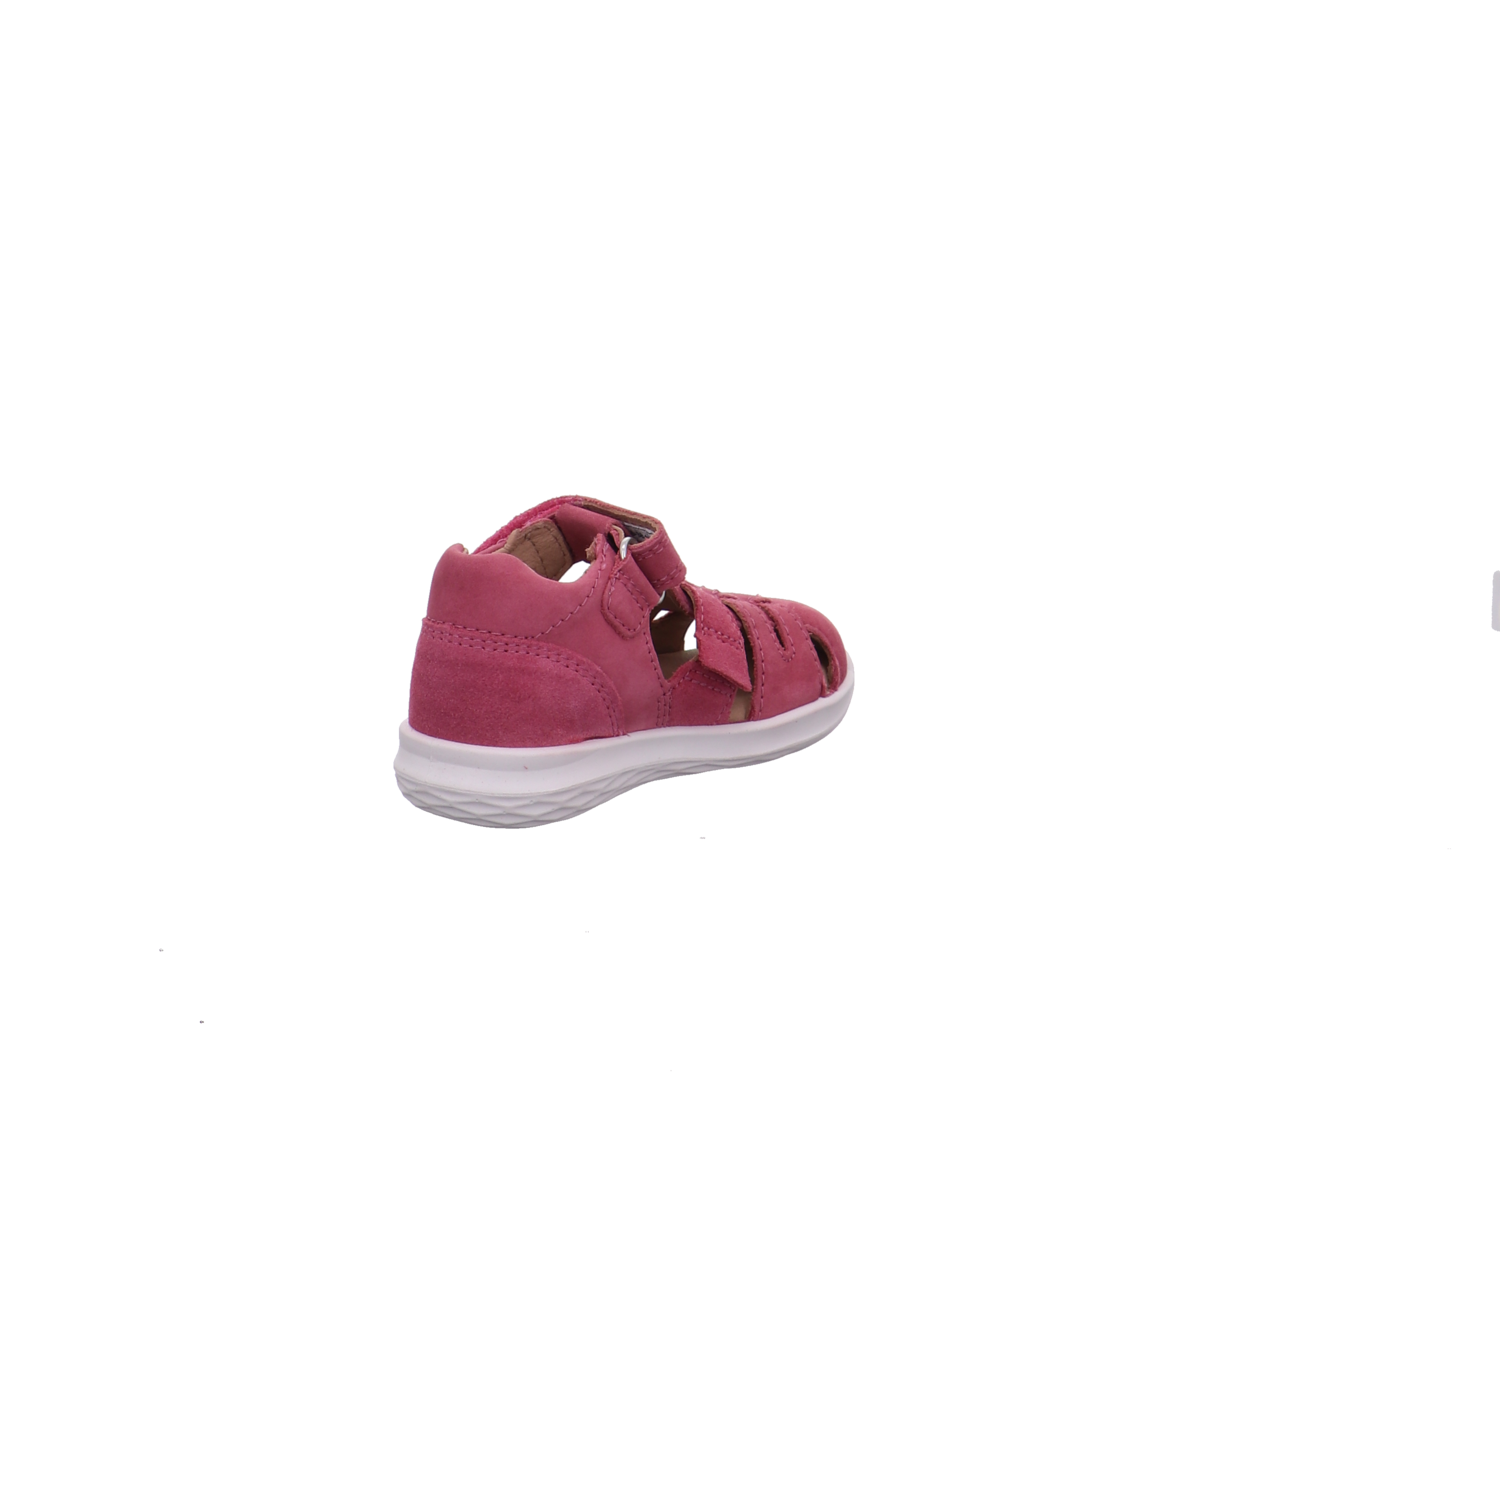 Superfit Offene Schuhe pink Bild5